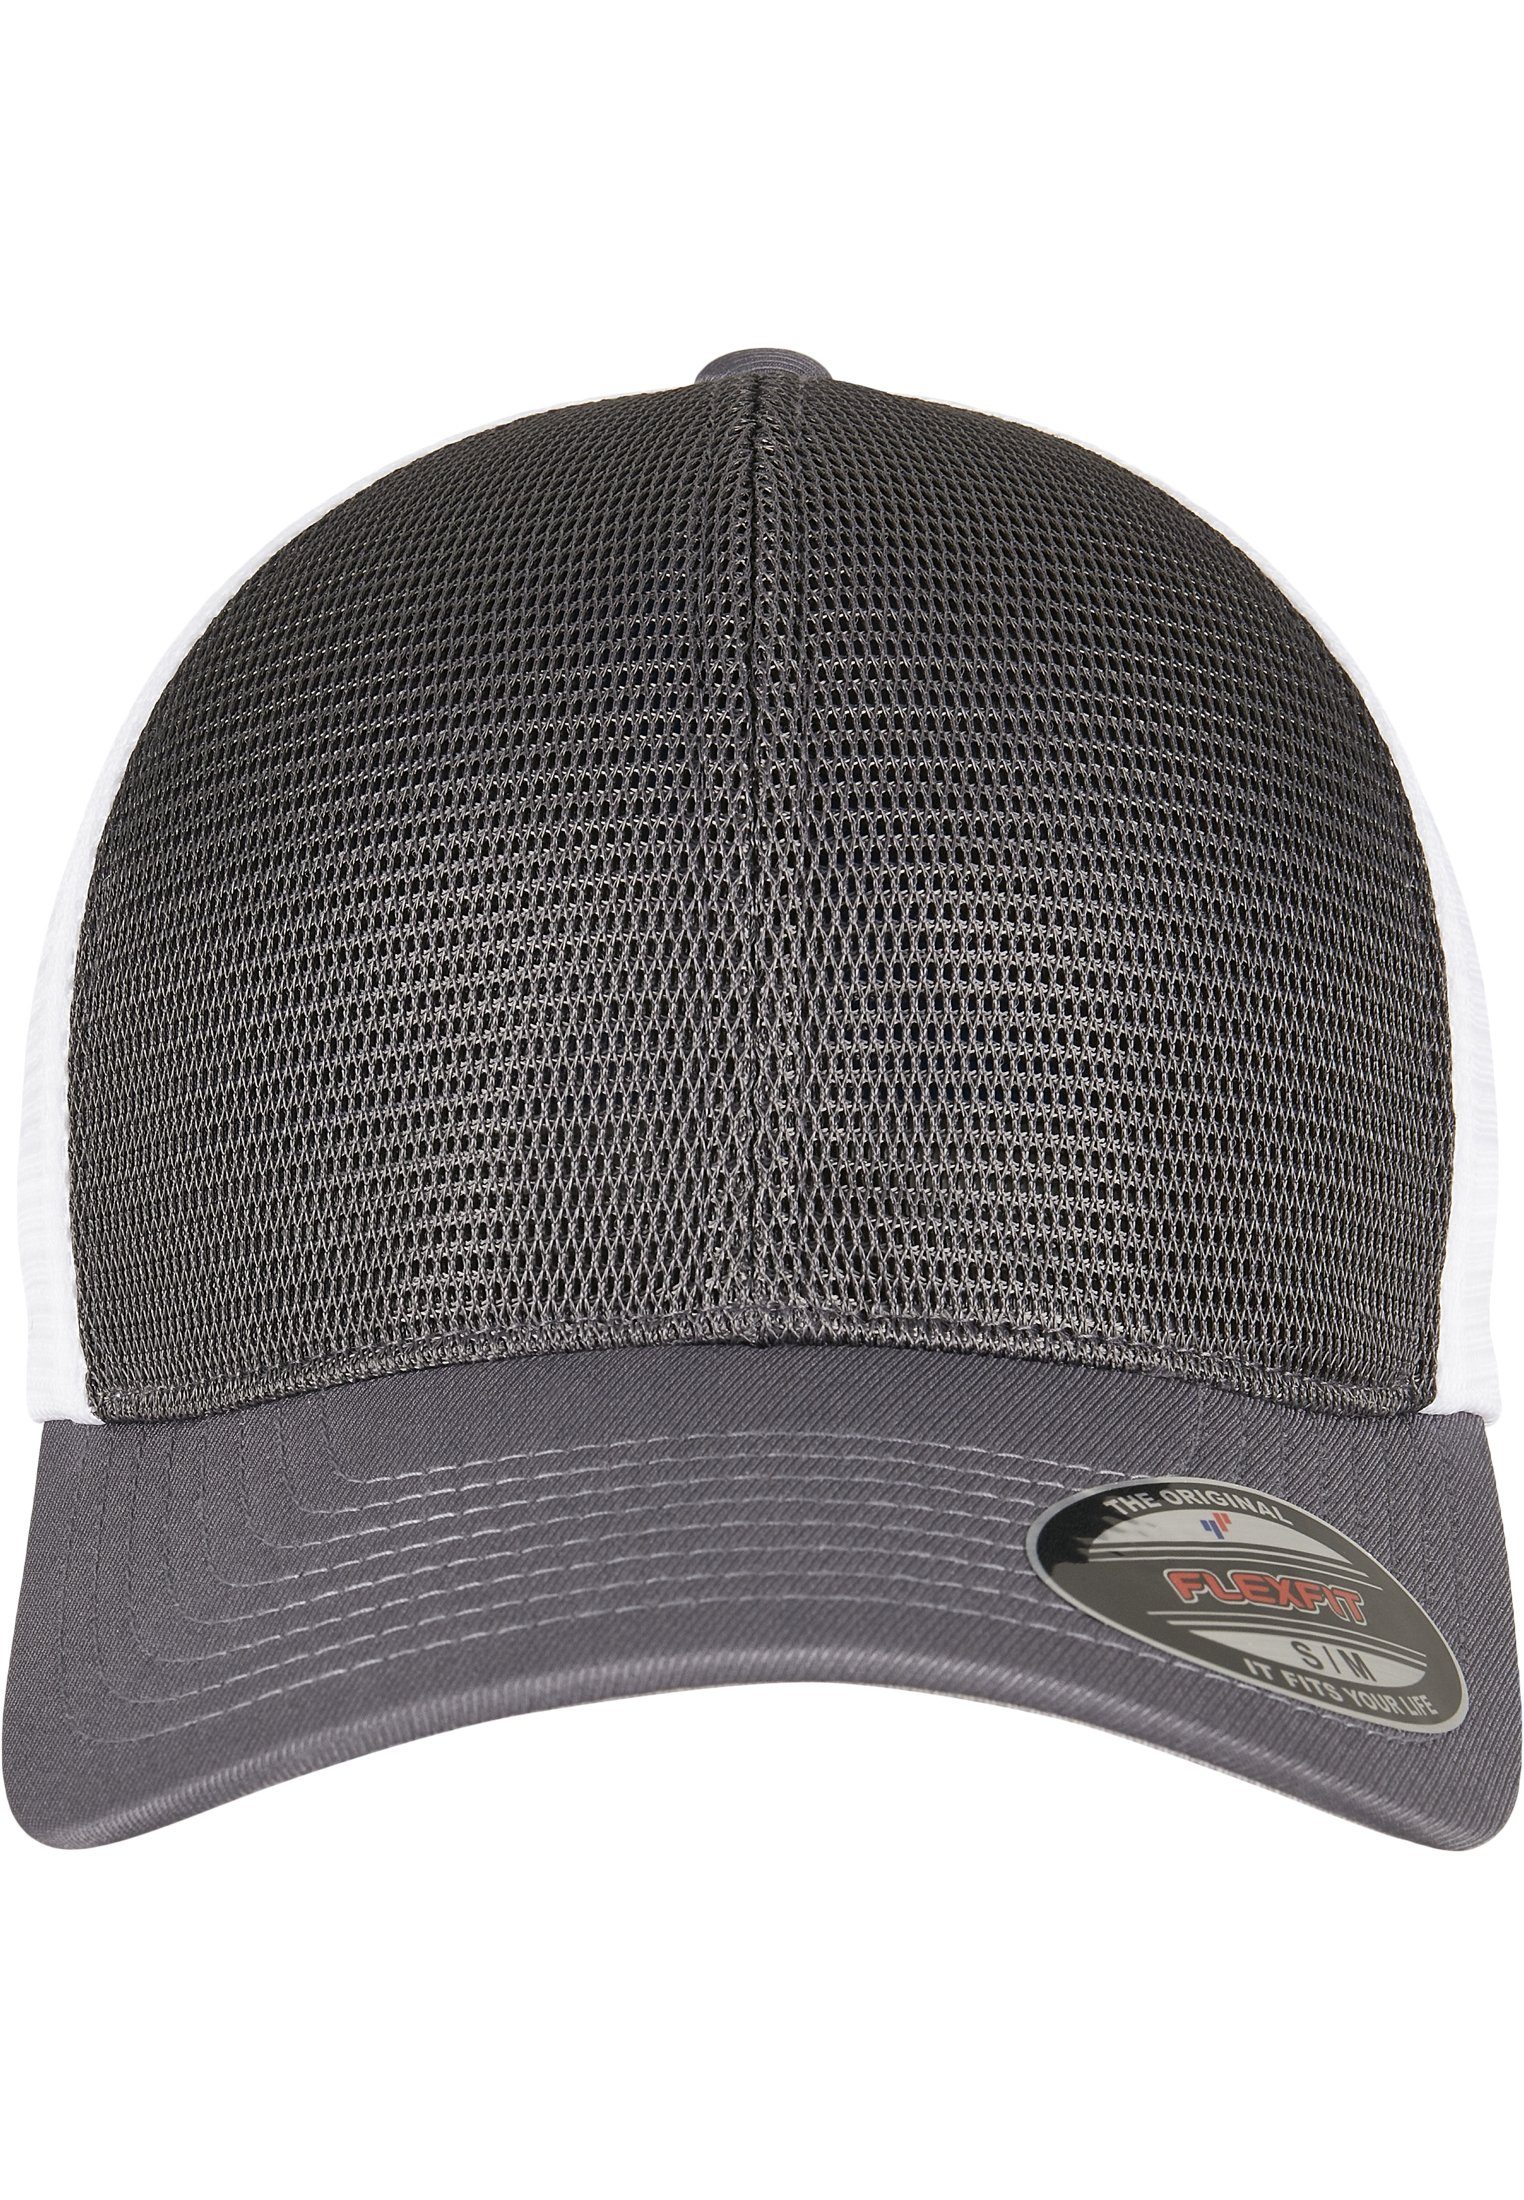 Flexfit Flex Cap Neue Kollektion 2-TONE 360 CAP OMNIMESH charcoal/white FLEXFIT